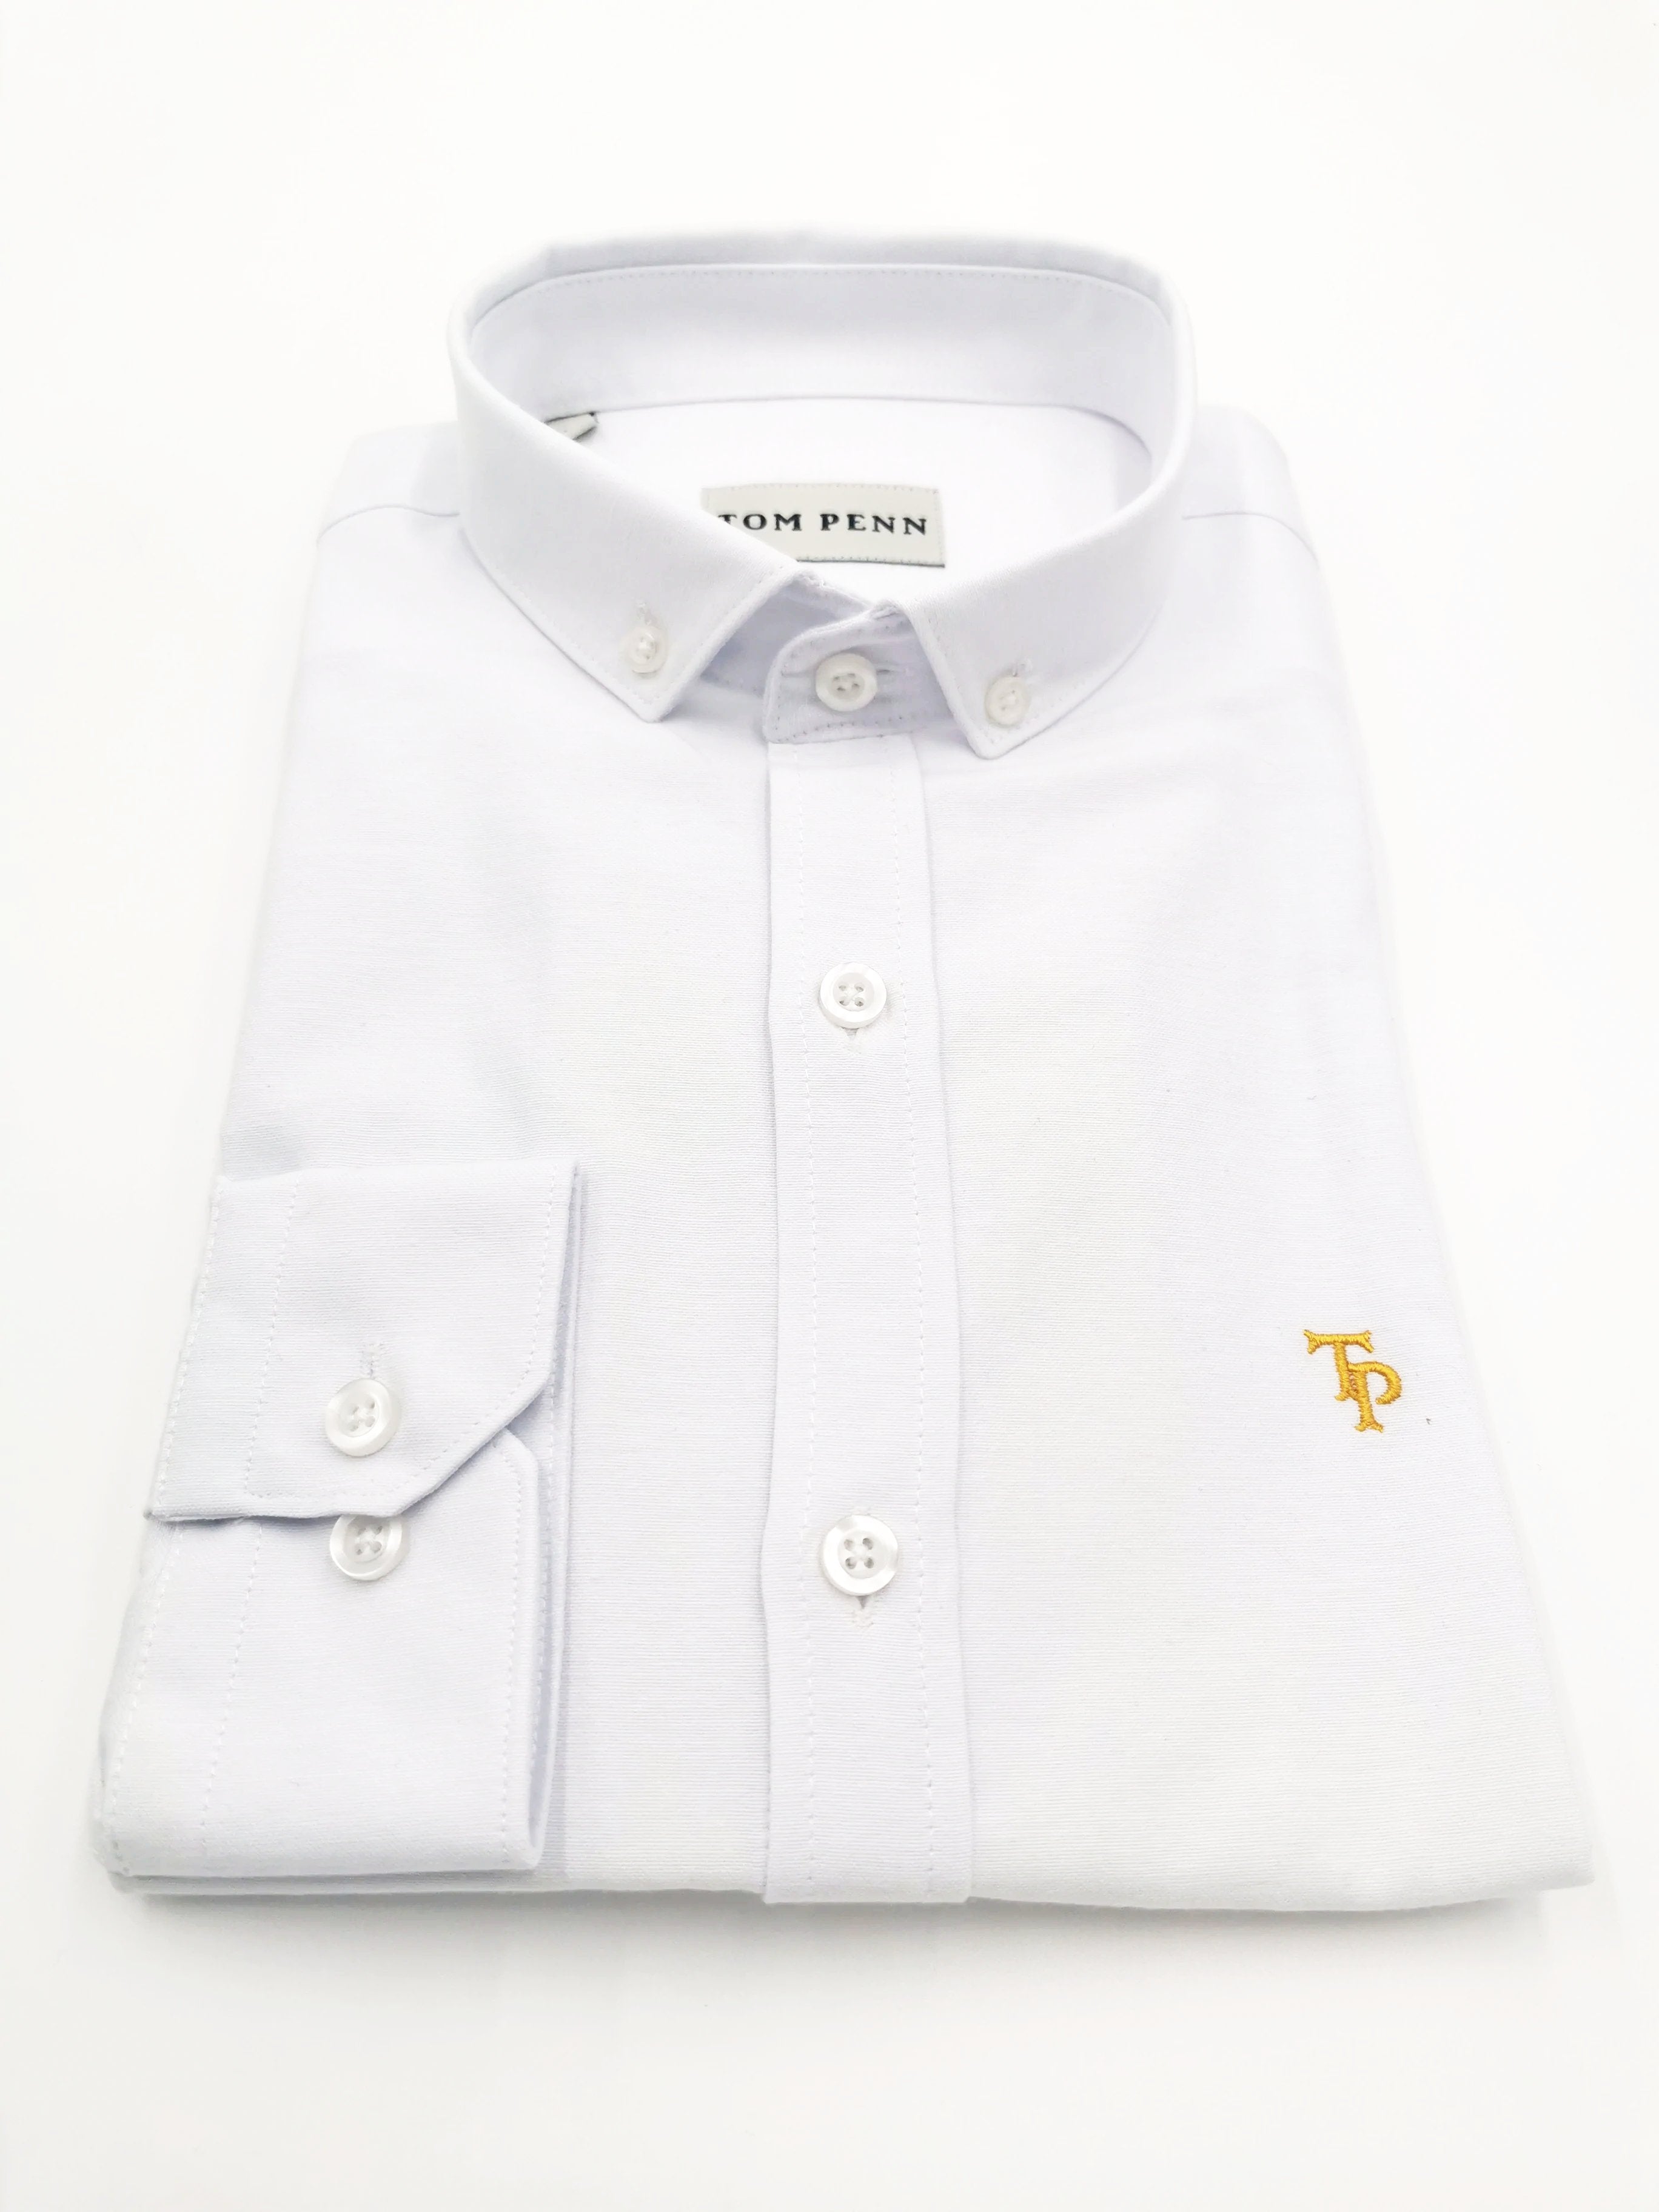 Men's Tom Penn Slim fit Button Down White Long Sleeve Shirt